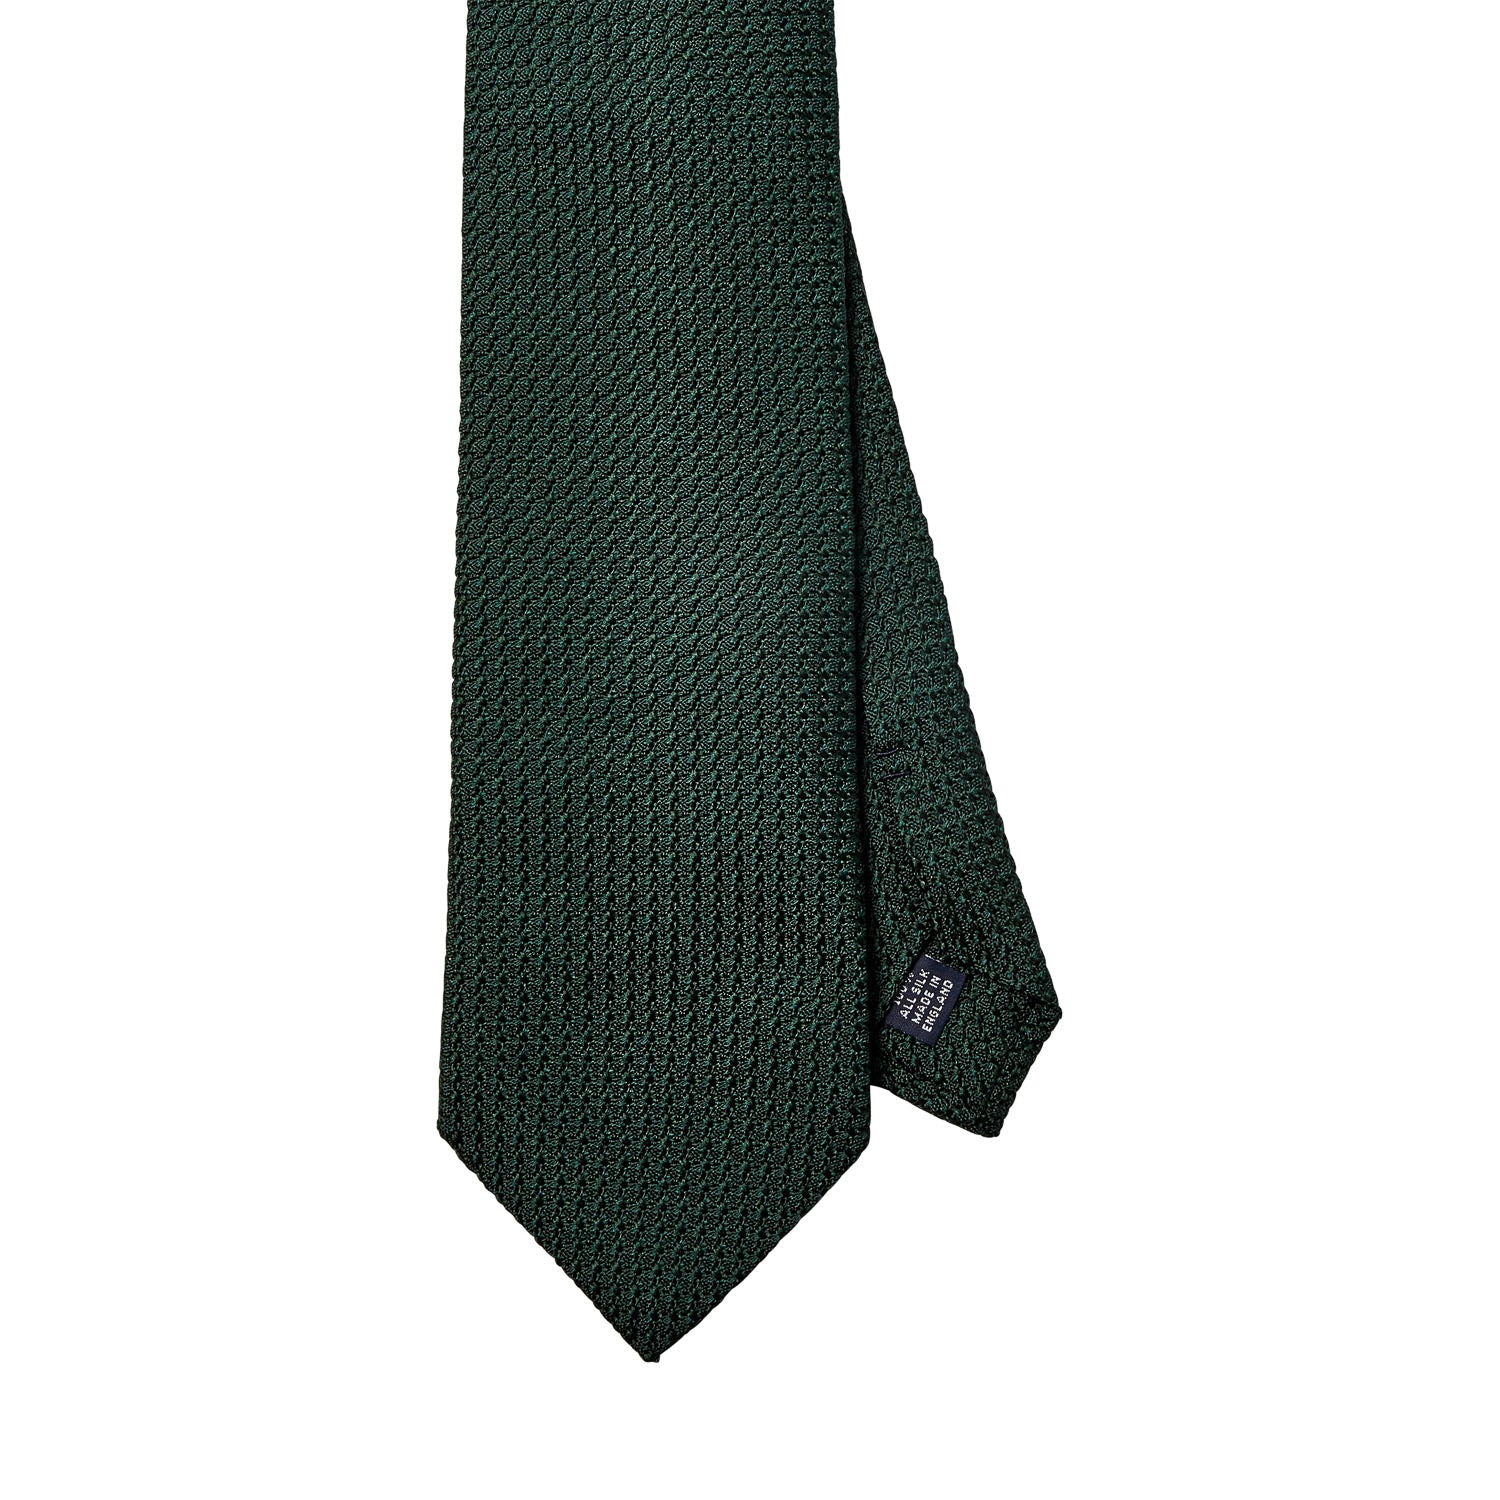 A Sovereign Grade Emerald Grenadine Grossa Tie from KirbyAllison.com, handmade on a white background showcasing quality craftsmanship.